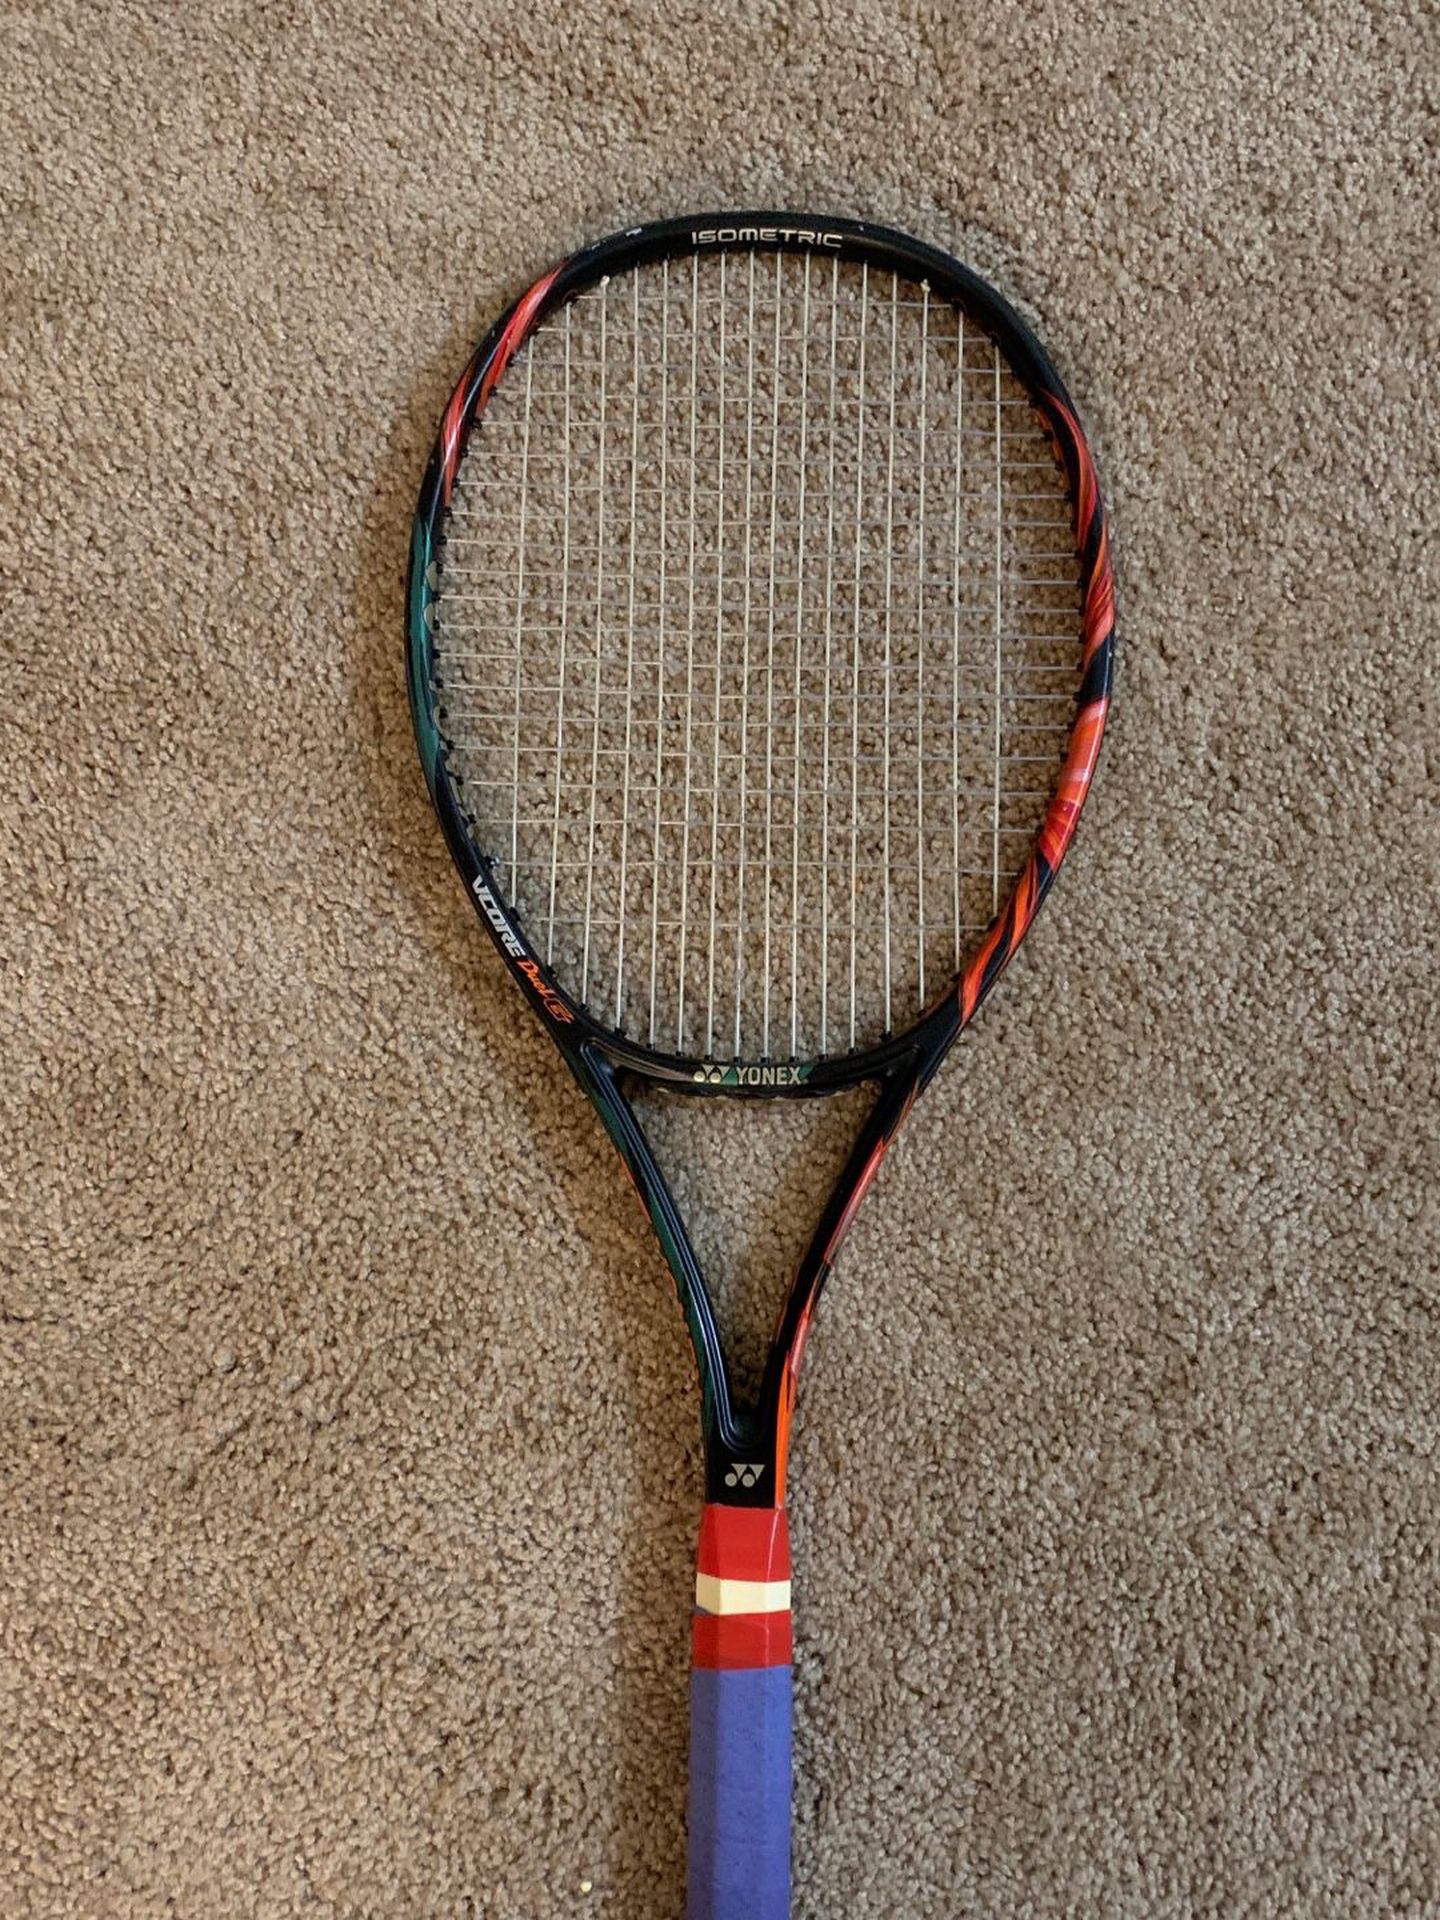 Yonex V Core tennis racket